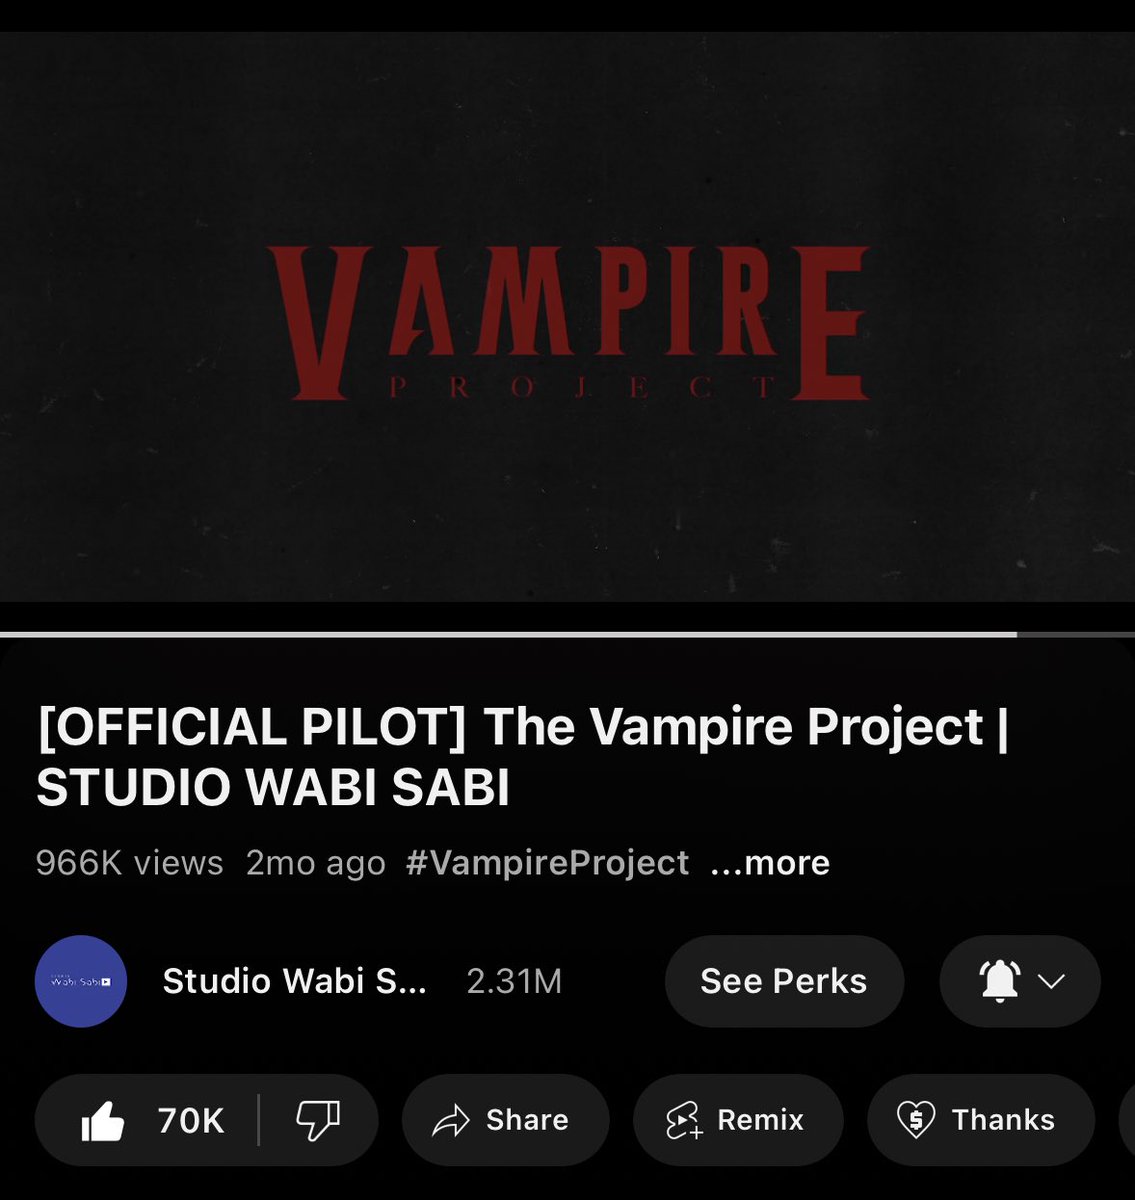 The Vampire Project [Official Pilot]
ใกล้จะ 1M แล้ววว
ก่อนเปิดกล้องเจอแน่ !!!

🏎️🔥🔥🔥 GO GO GO 

🧛🏻youtu.be/DLb-Cy43ewg

#VampireProject
#WABISABINEXTPAGE
#บุ๋นเปรม #bb0un #prem_space